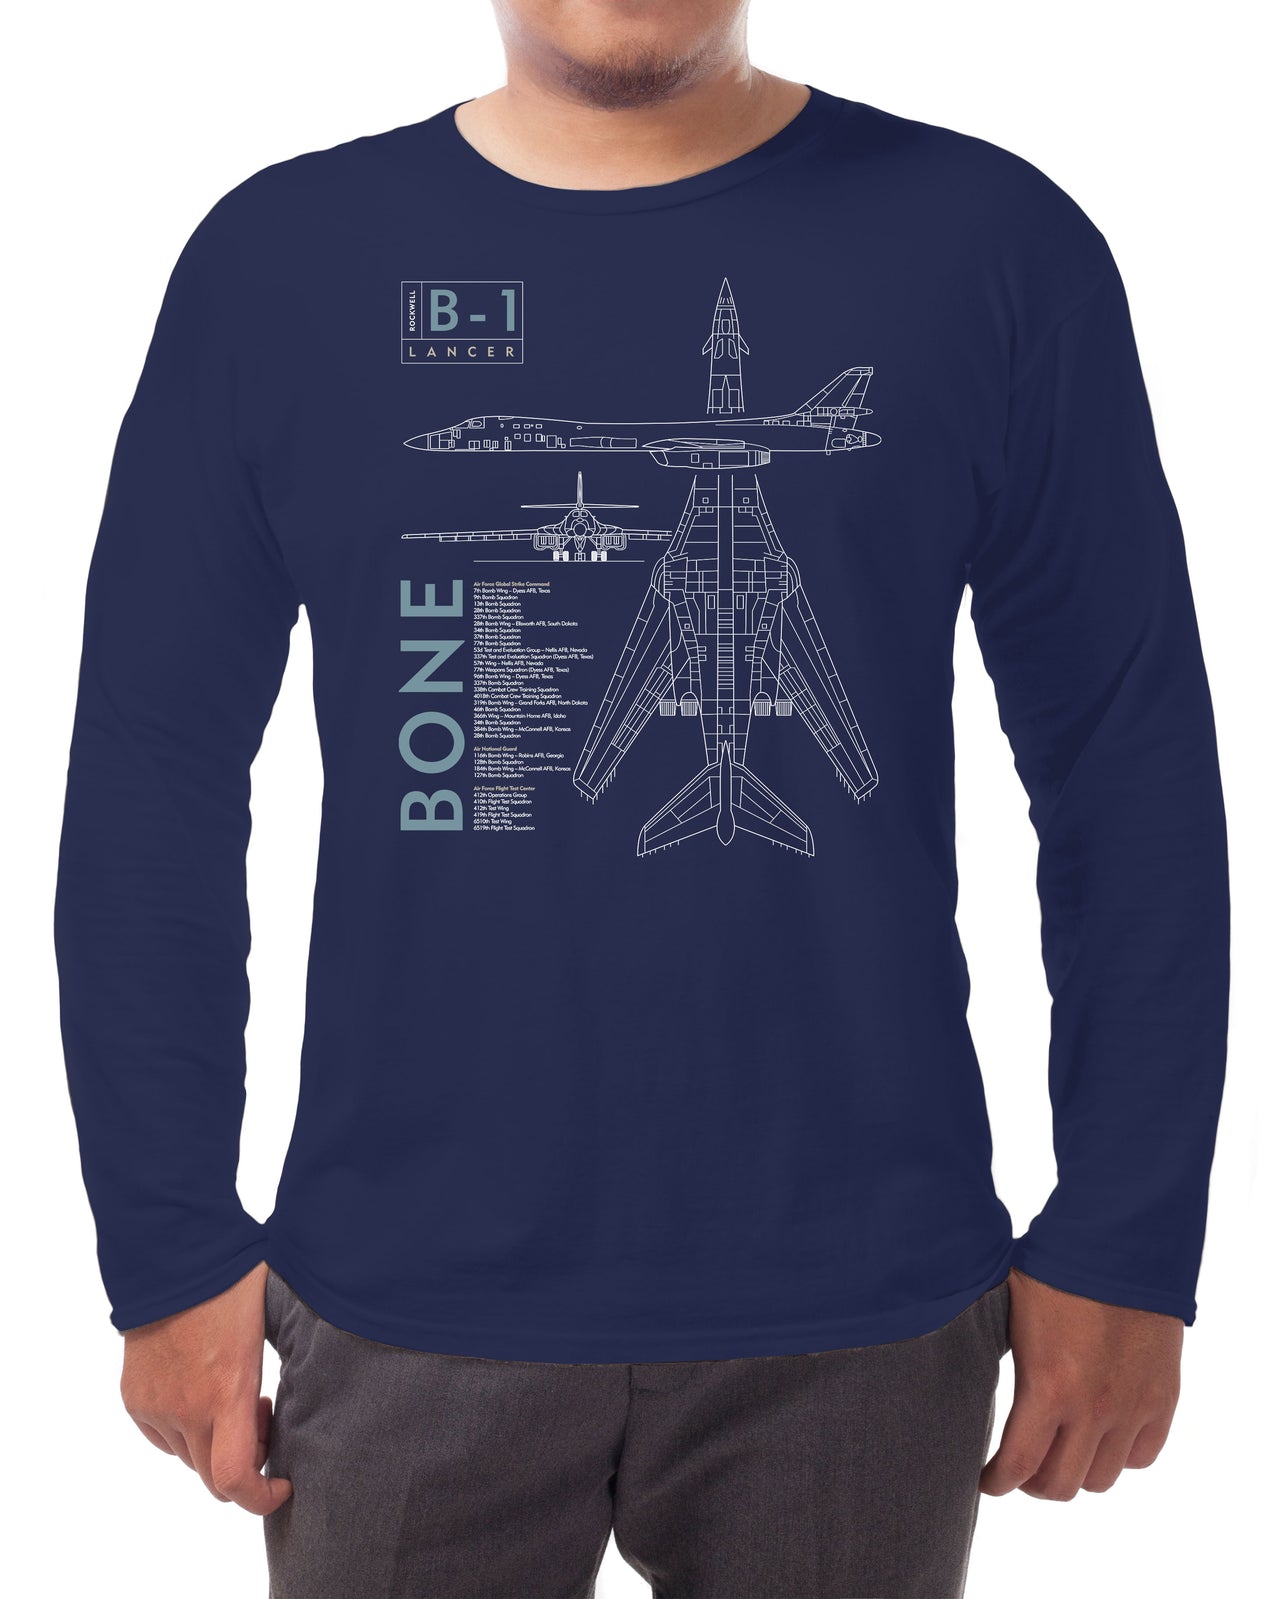 Rockwell B-1 Lancer - Long-sleeve T-shirt